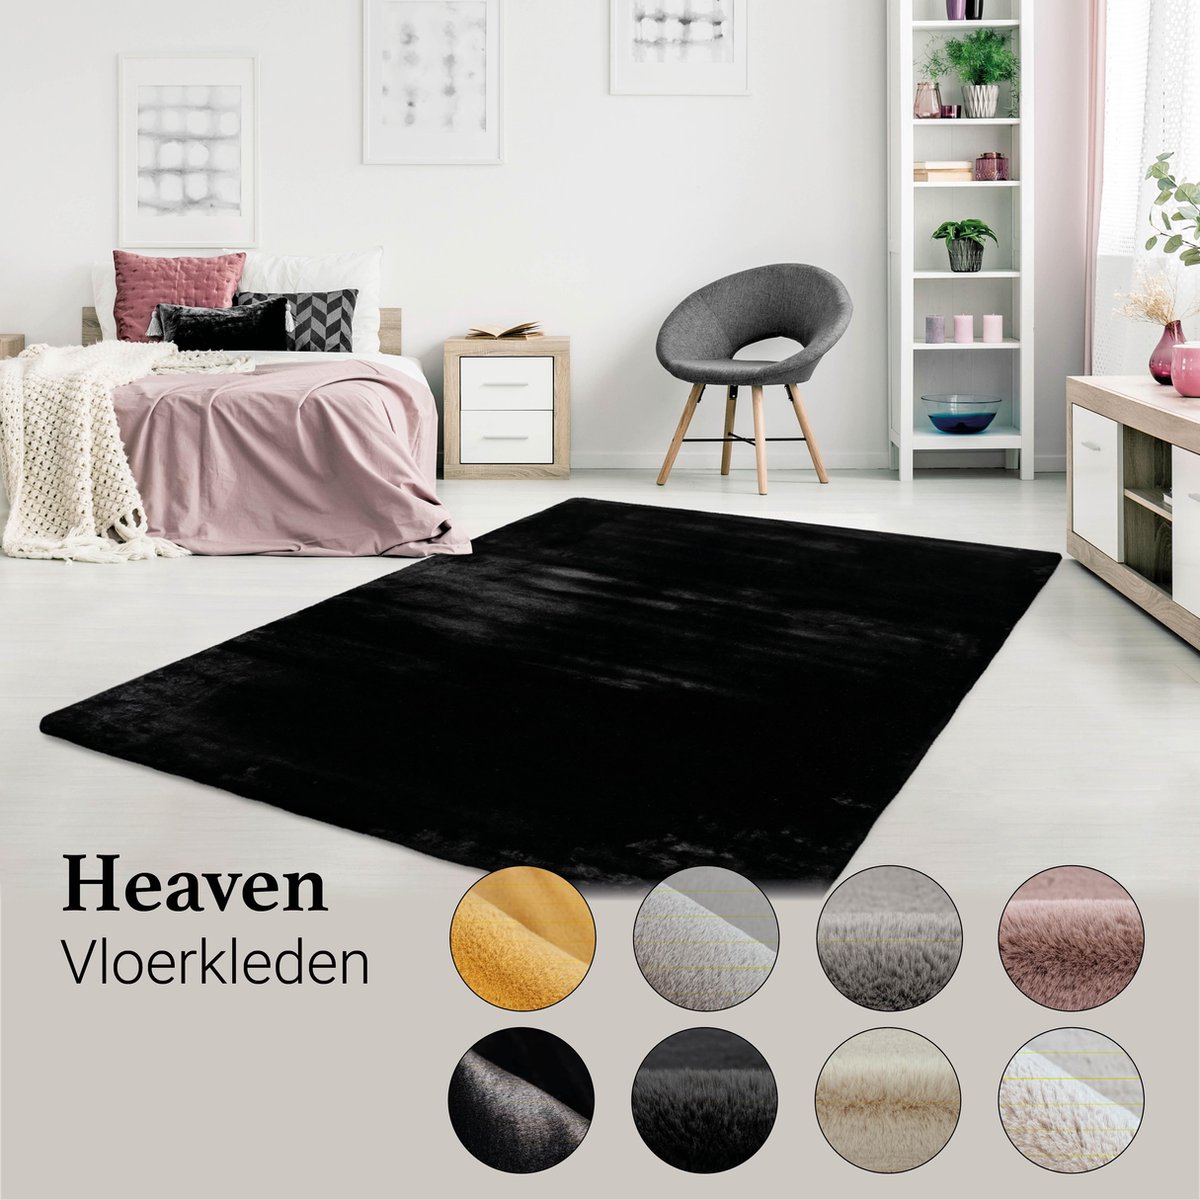 Vloerkleed Heaven Black - Hoogpolig Shaggy - 160x230cm